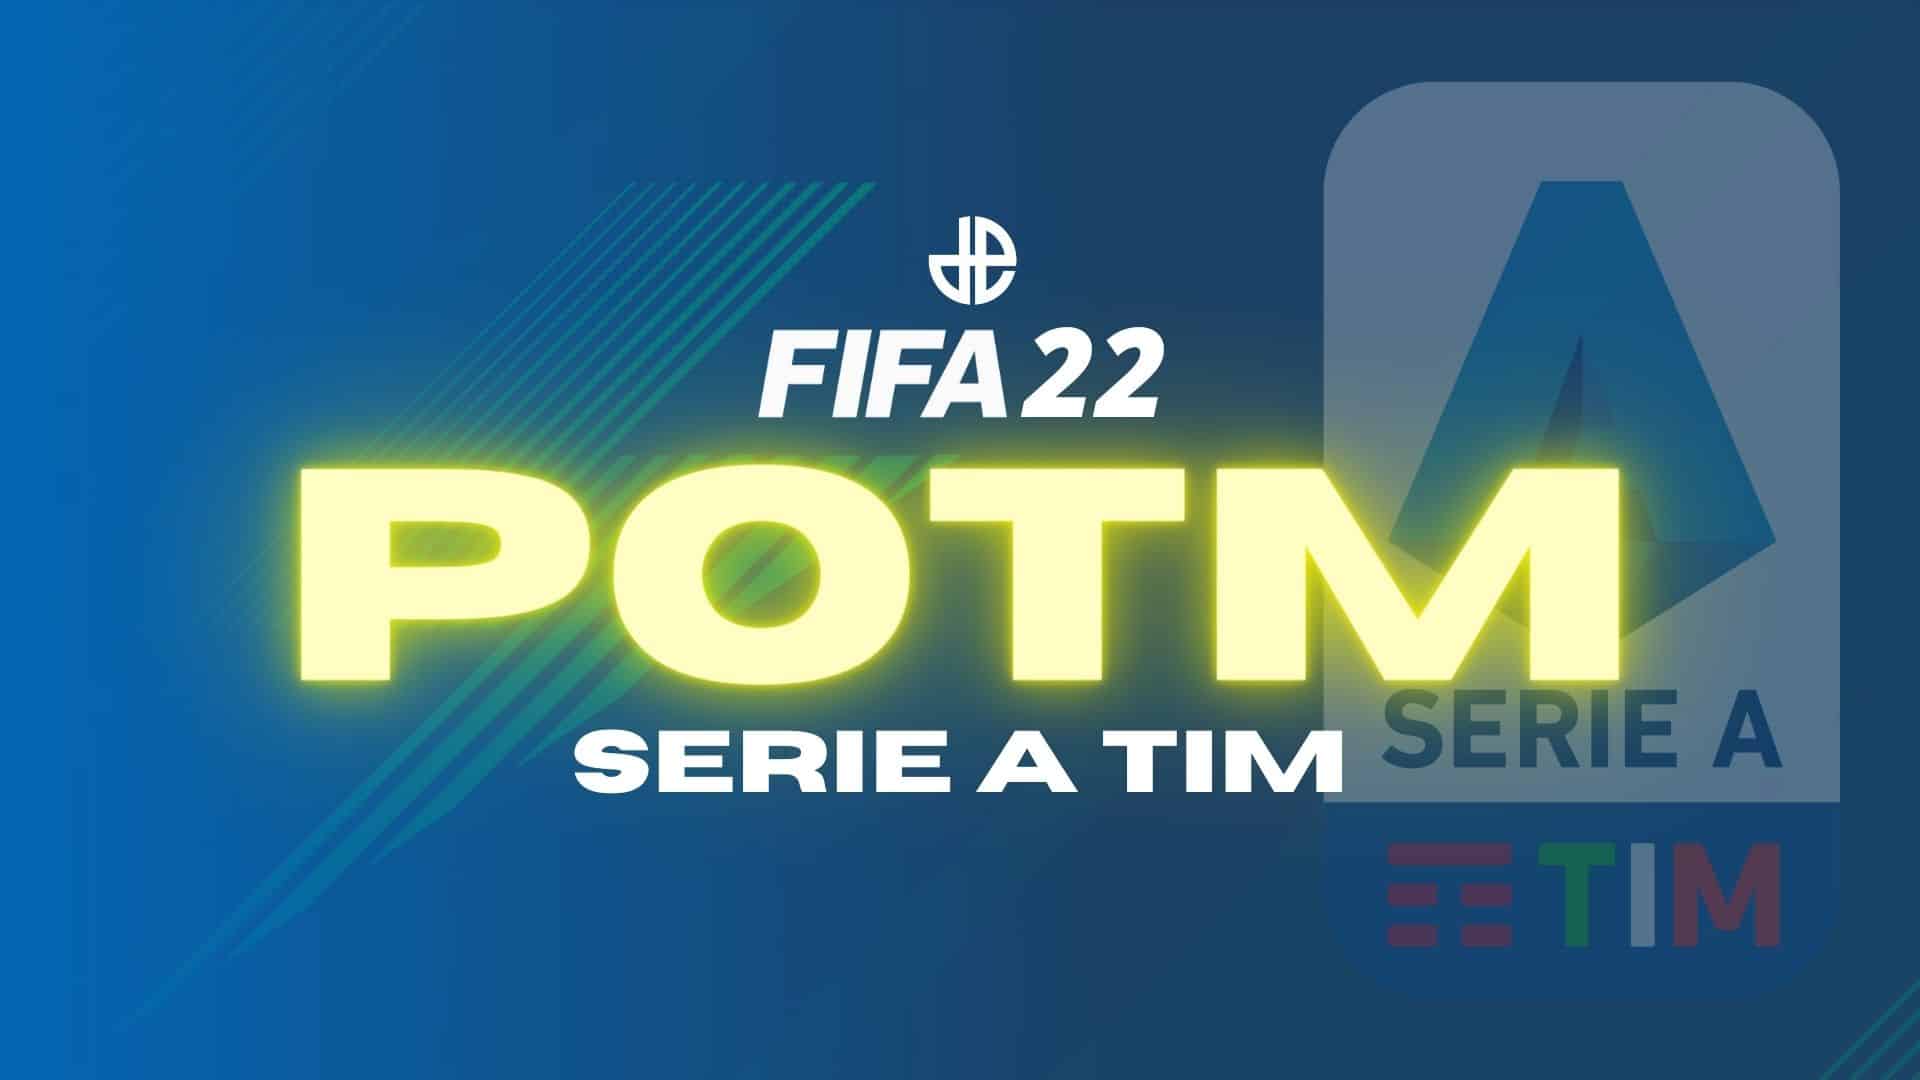 FIFA 22 Serie A POTM hub